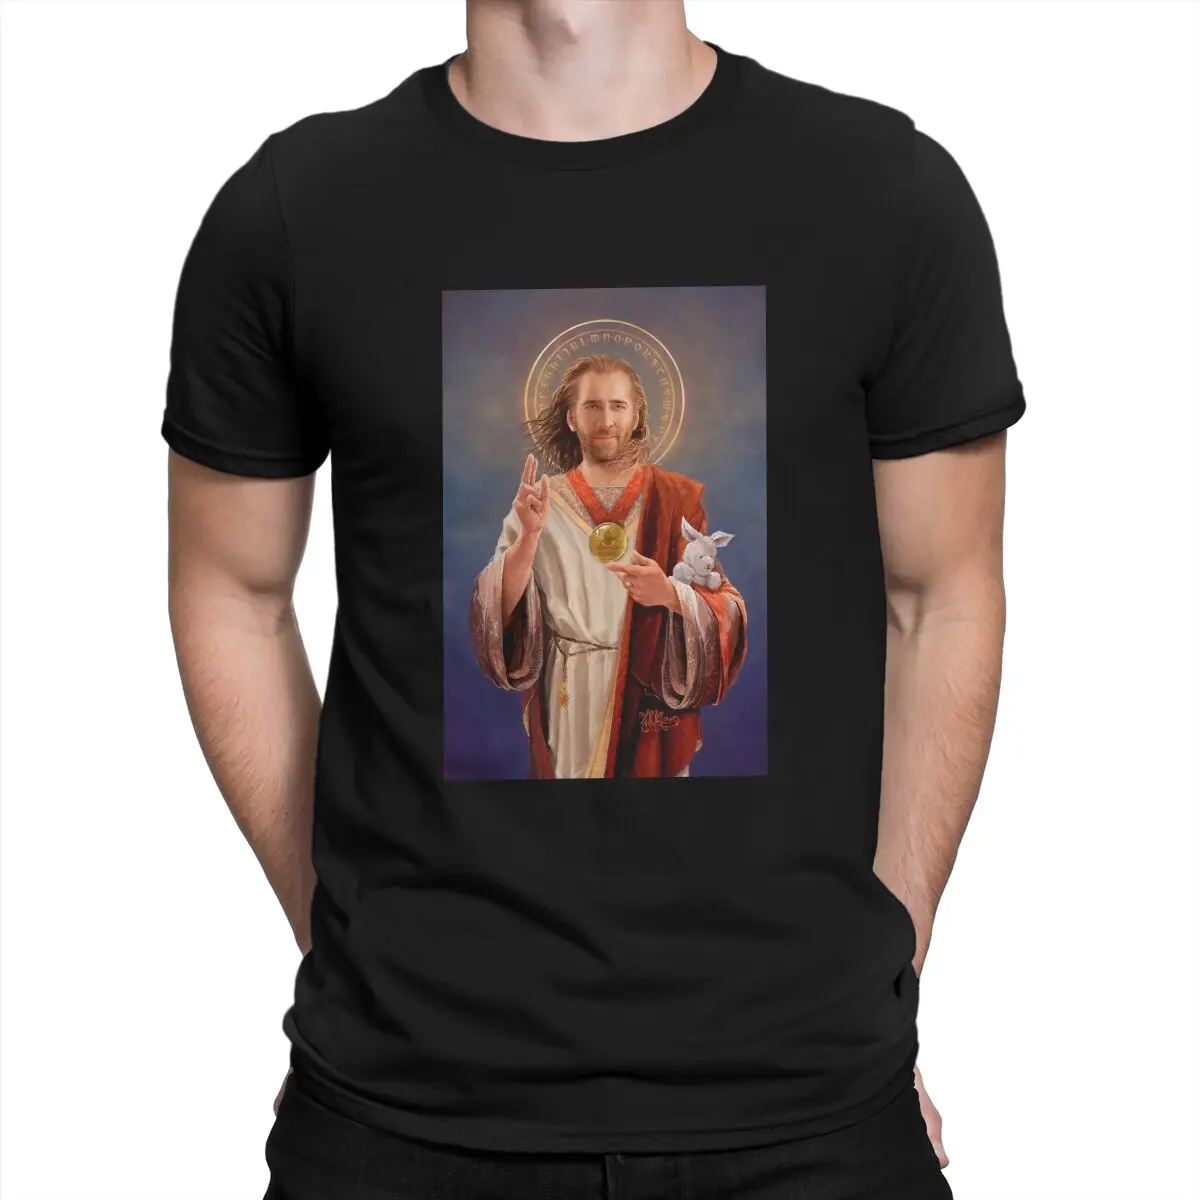 

Nicolas Cage Original Religious Painting T Shirt Harajuku Grunge Men's Tshirt O-Neck